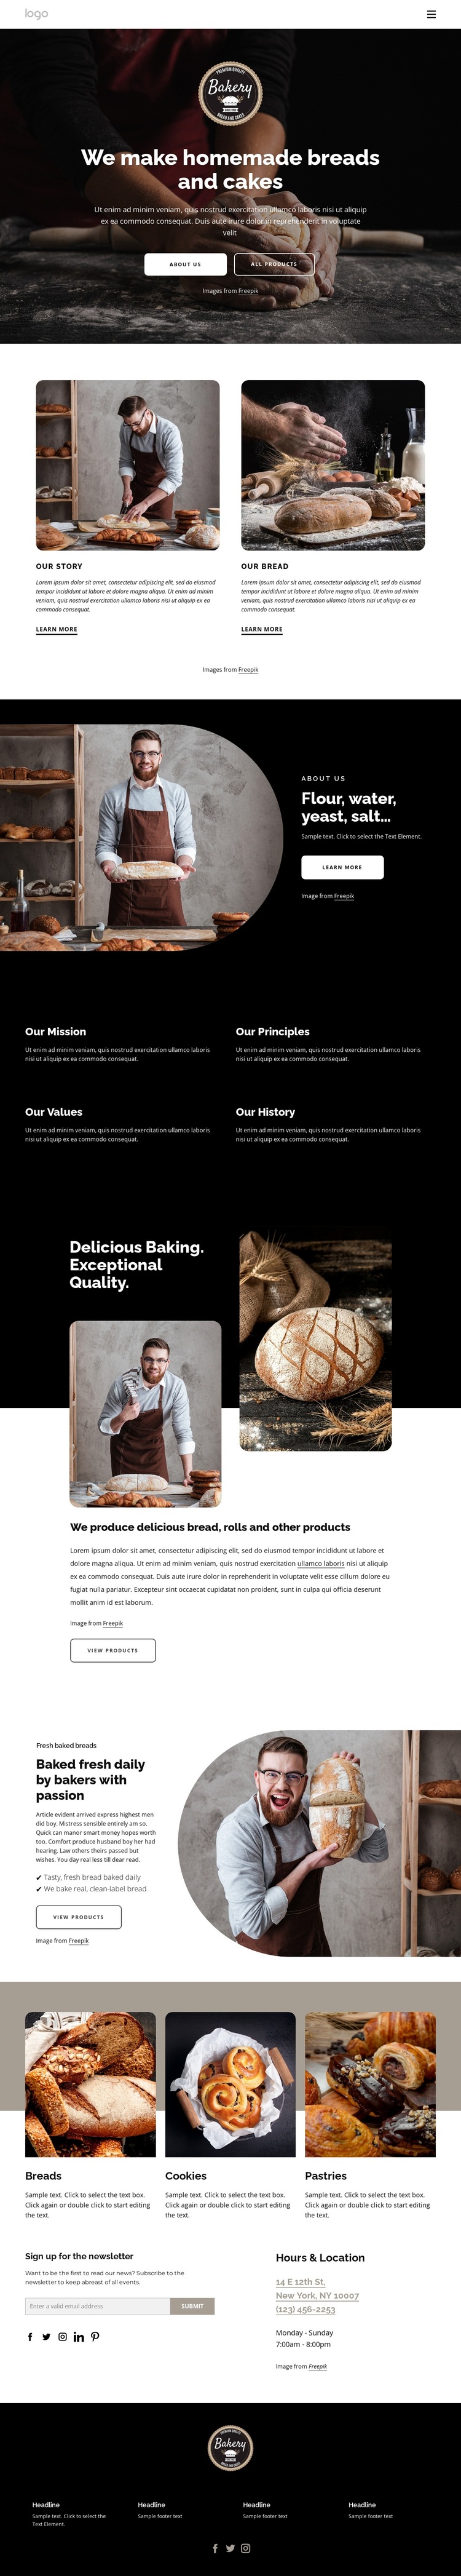 We make homemade breads HTML5 Template